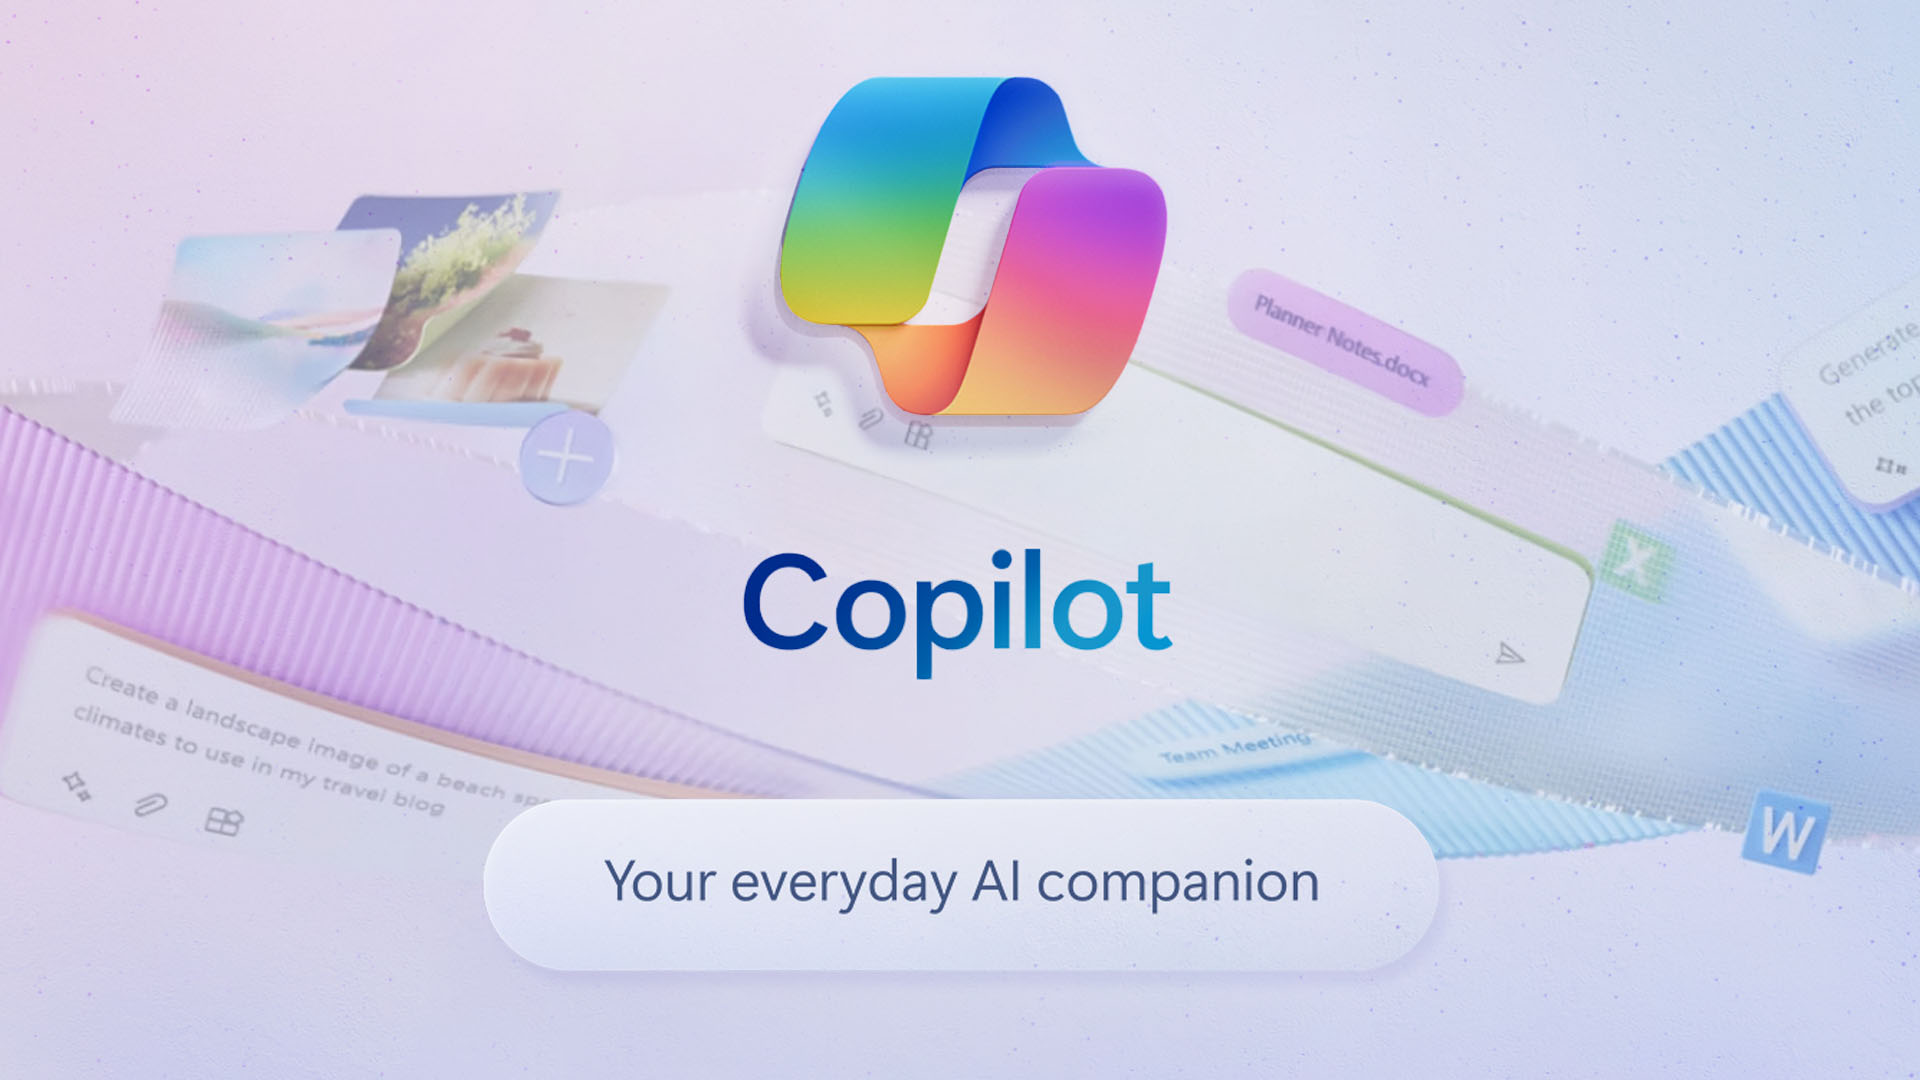 Microsoft's premium CoPilot AI service is here, but it's not cheap